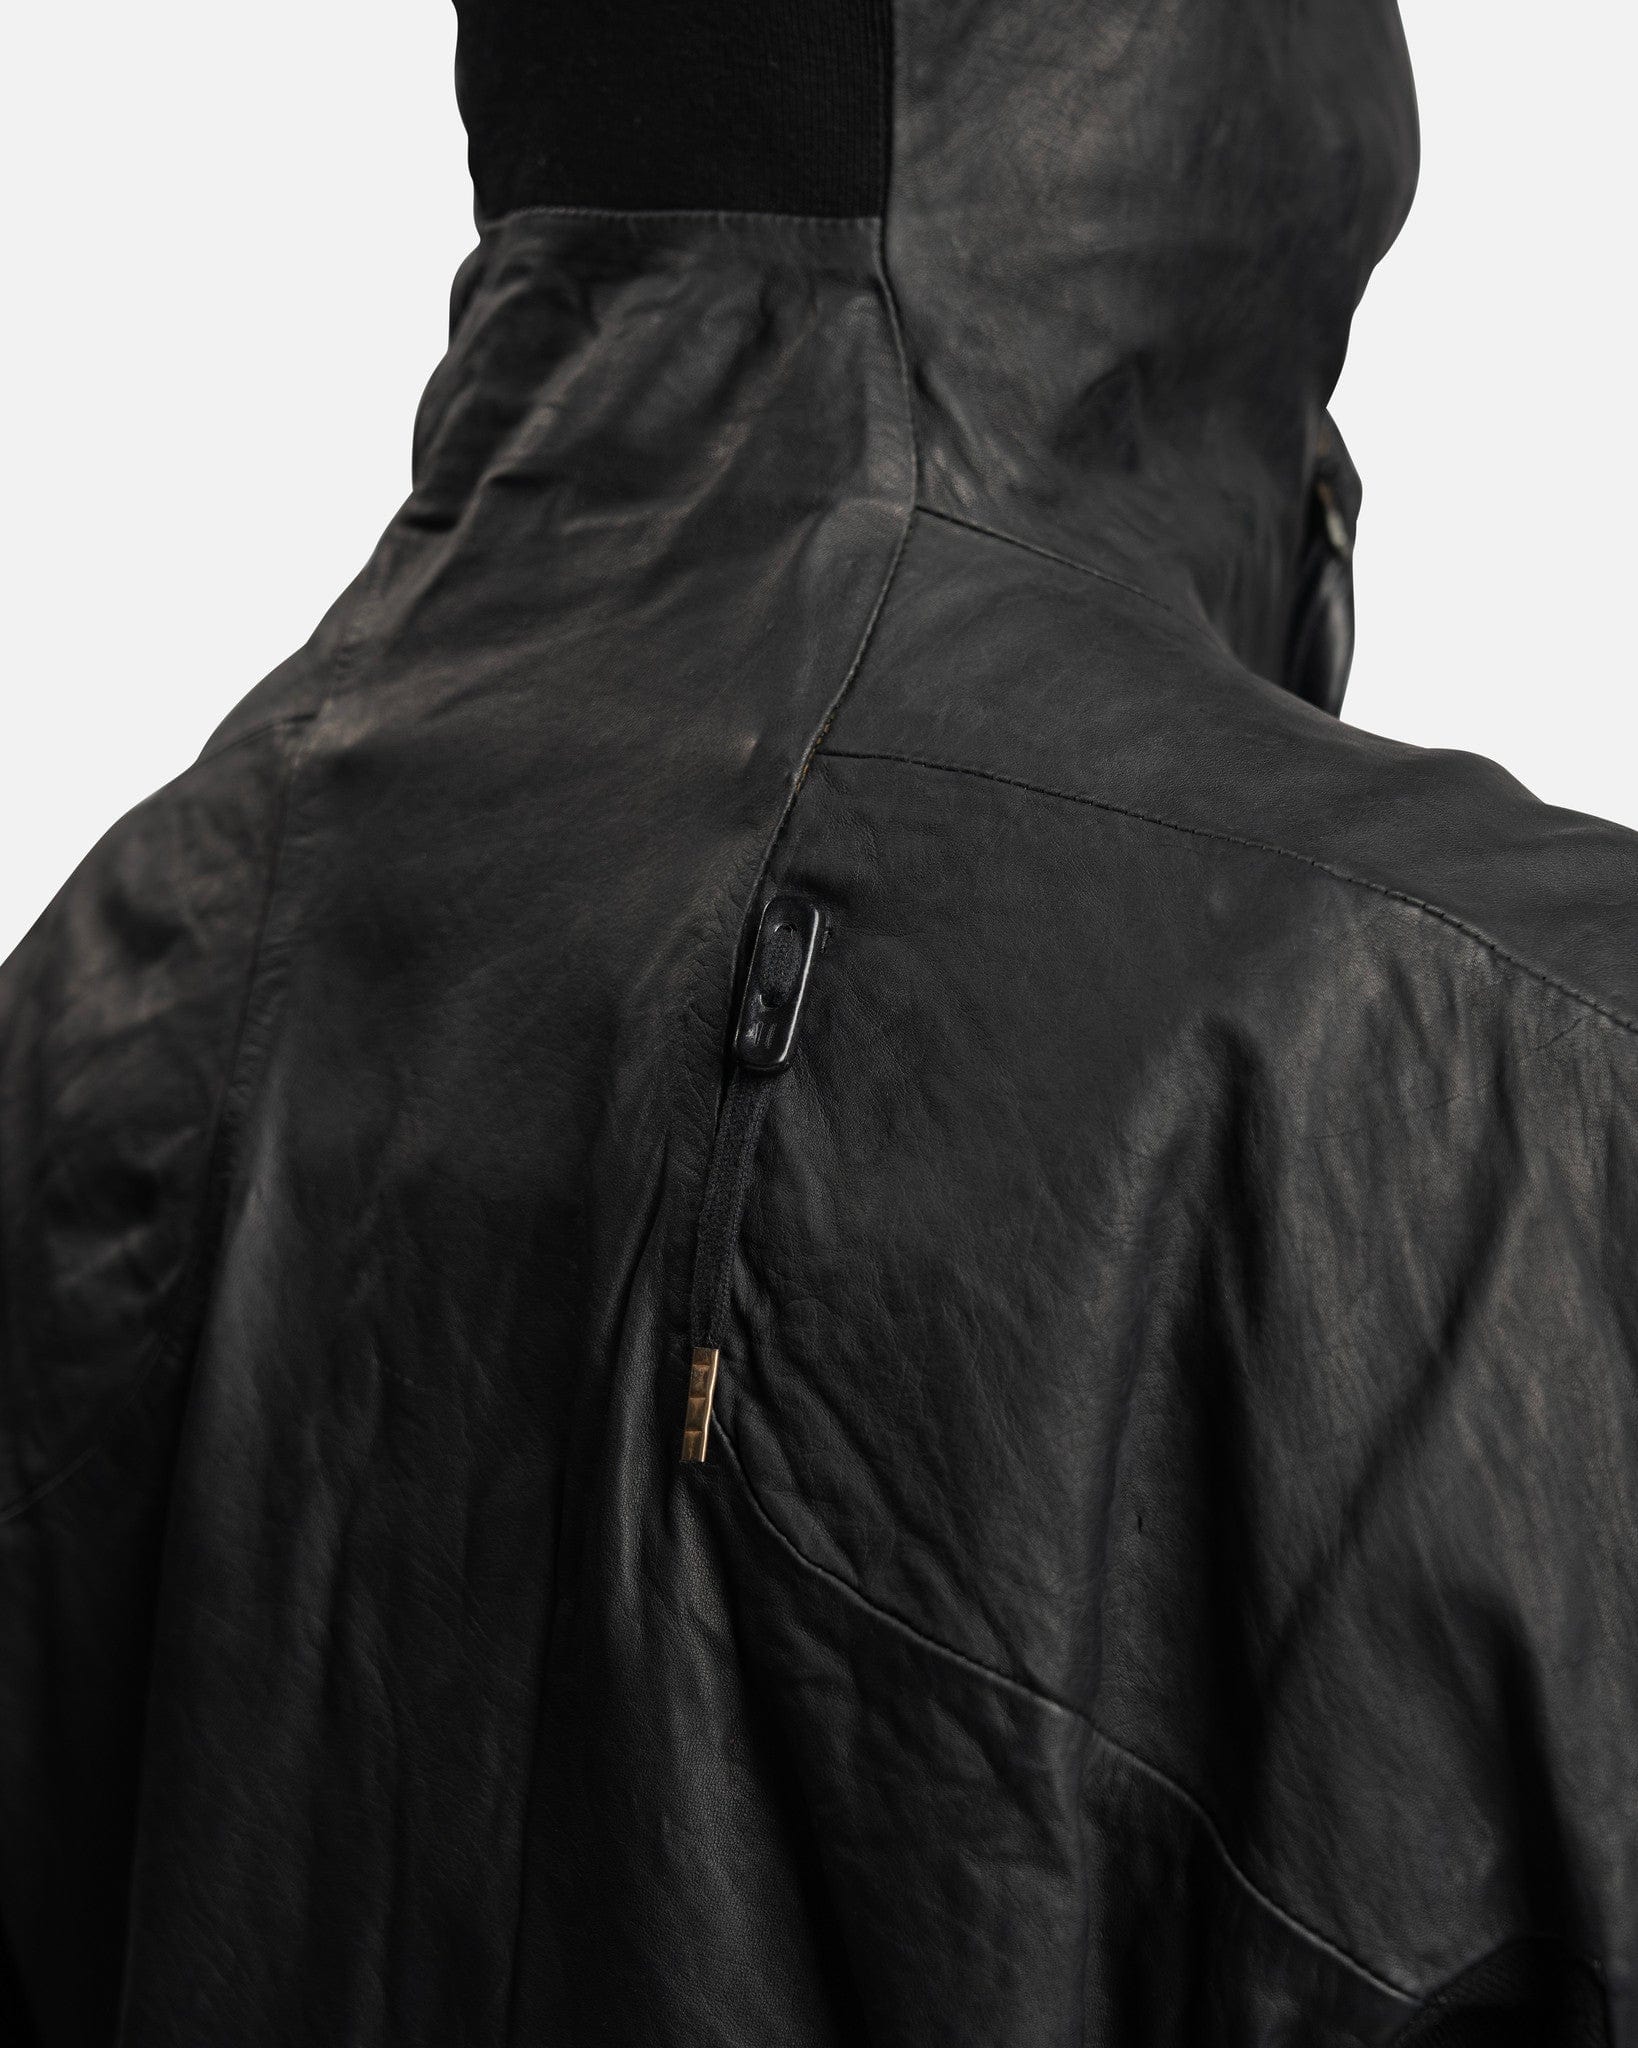 Boris Bidjan Saberi Men's Jackets Zipper 22.1 Jacket in Black